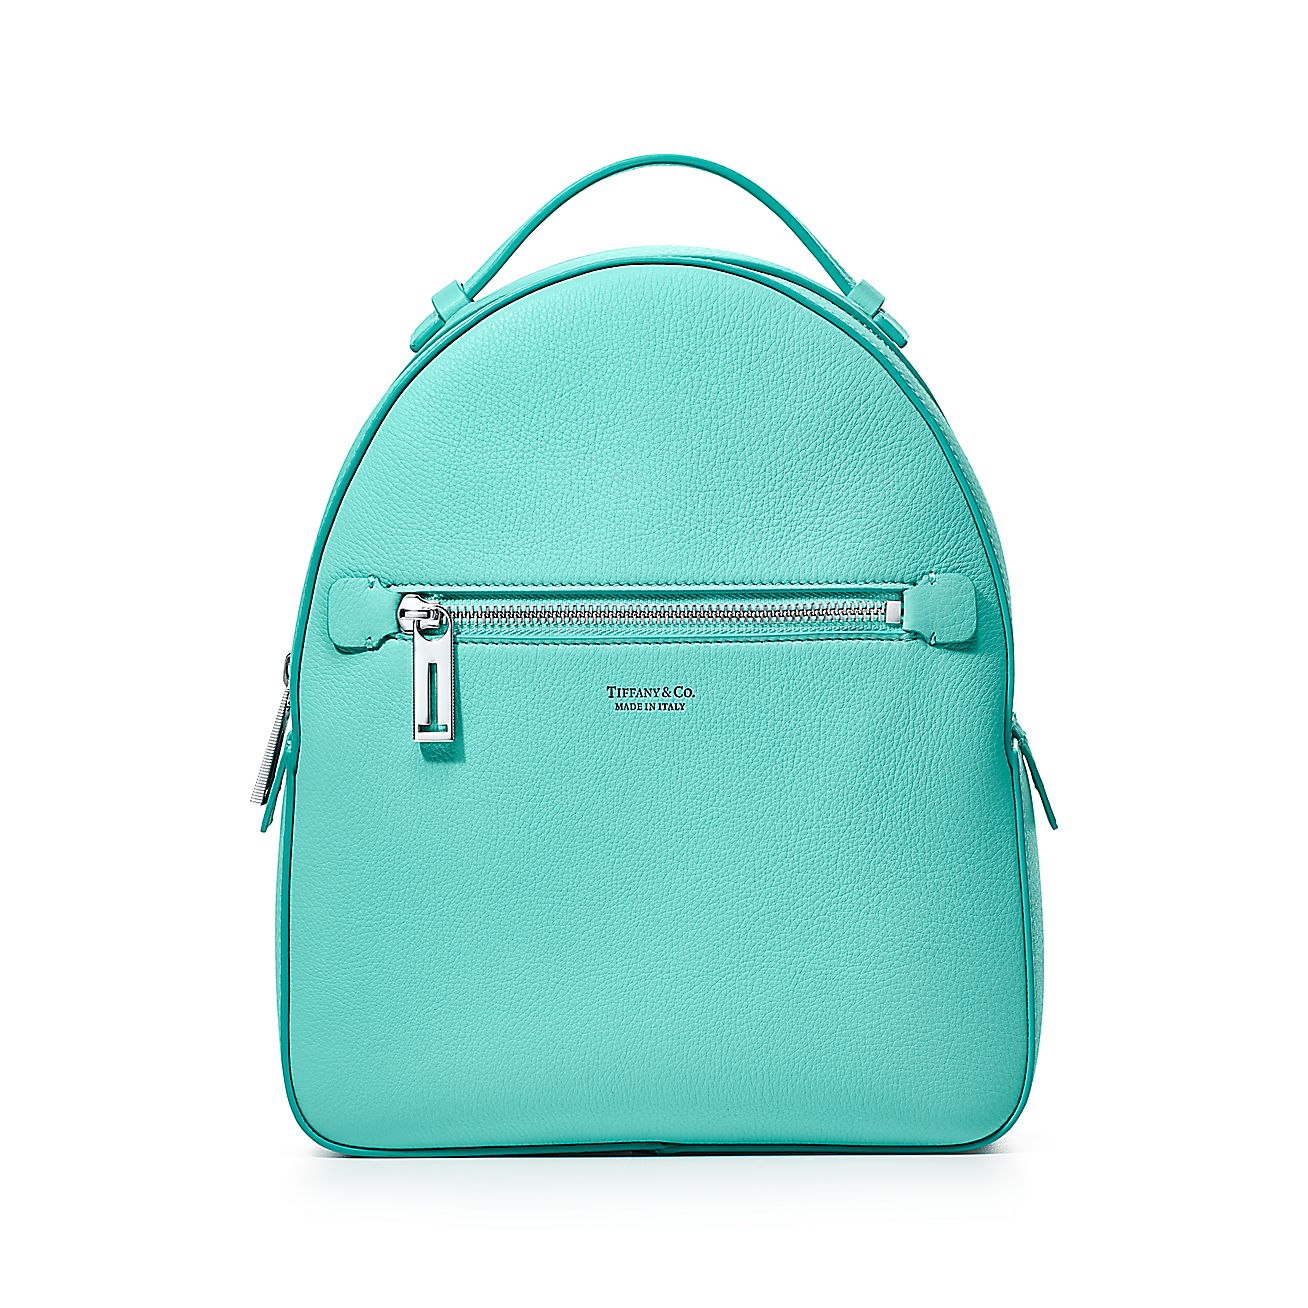 Backpack In Tiffany Blue Grain Calfskin Leather Tiffany Co